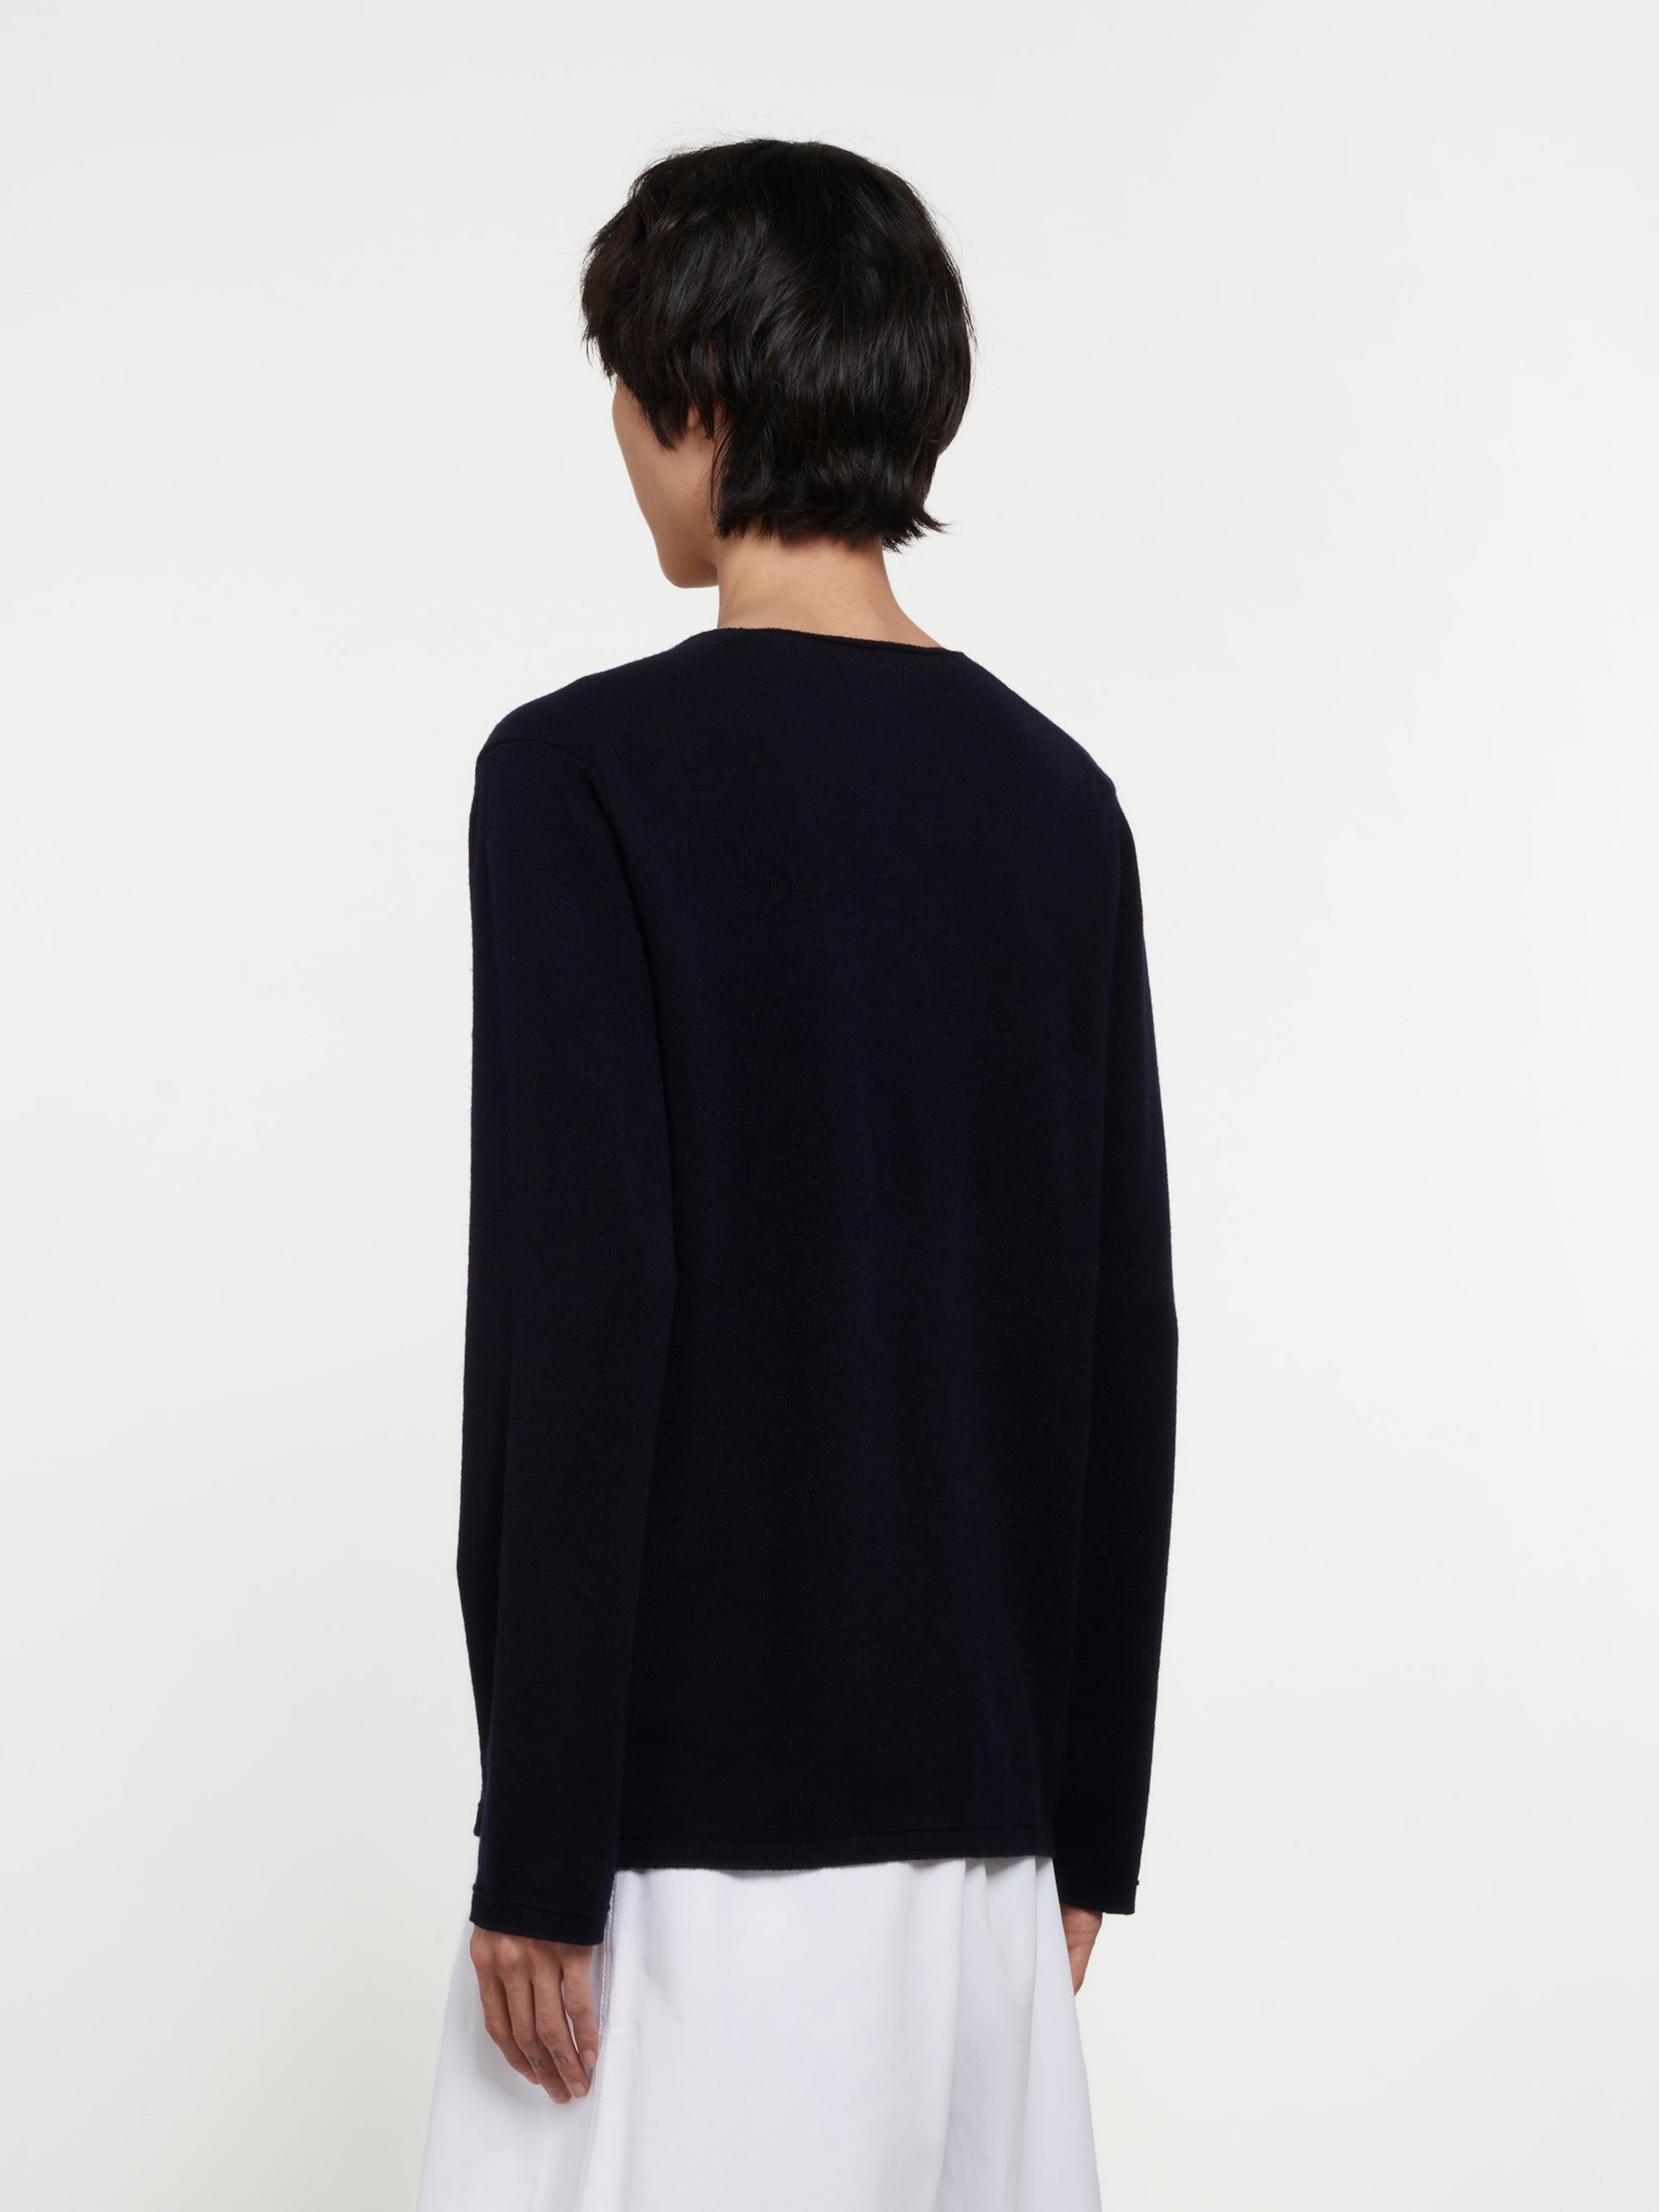 CDG Shirt - Lacoste Men’s Knit Sweater - (Black) view 3